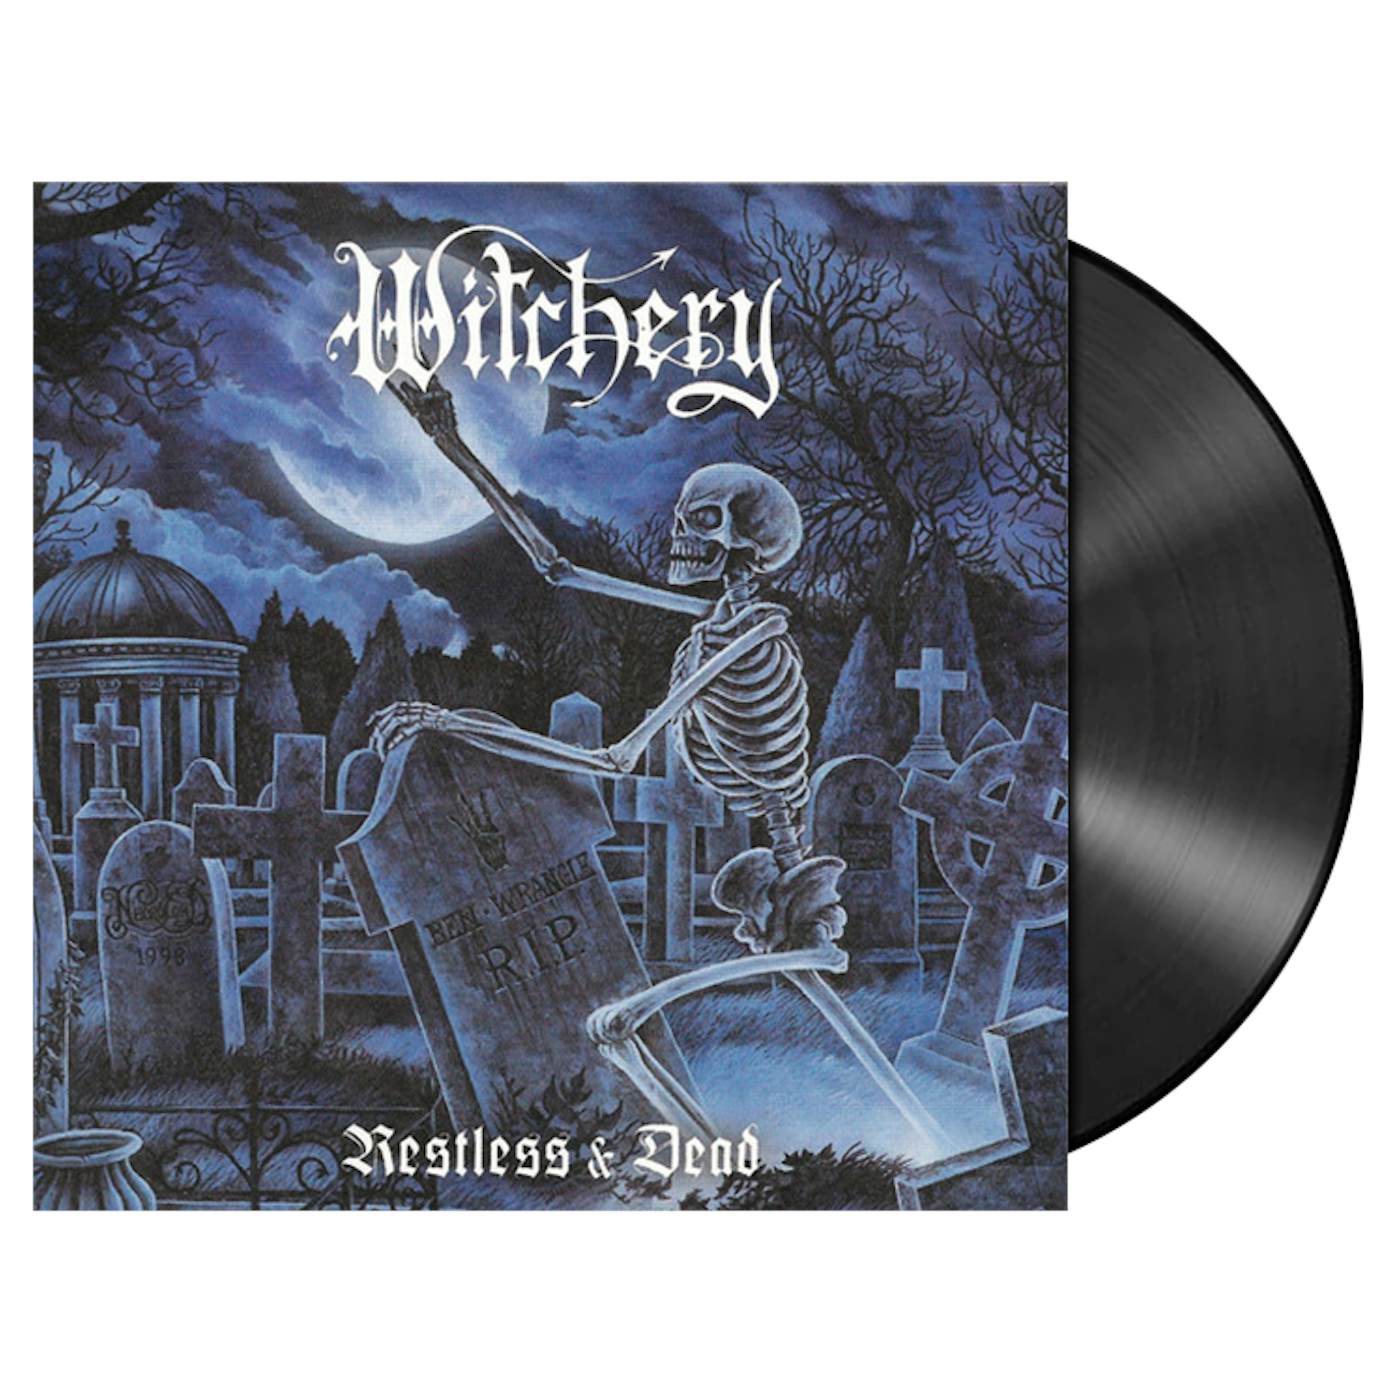 WITCHERY - 'Restless & Dead' LP (Vinyl)